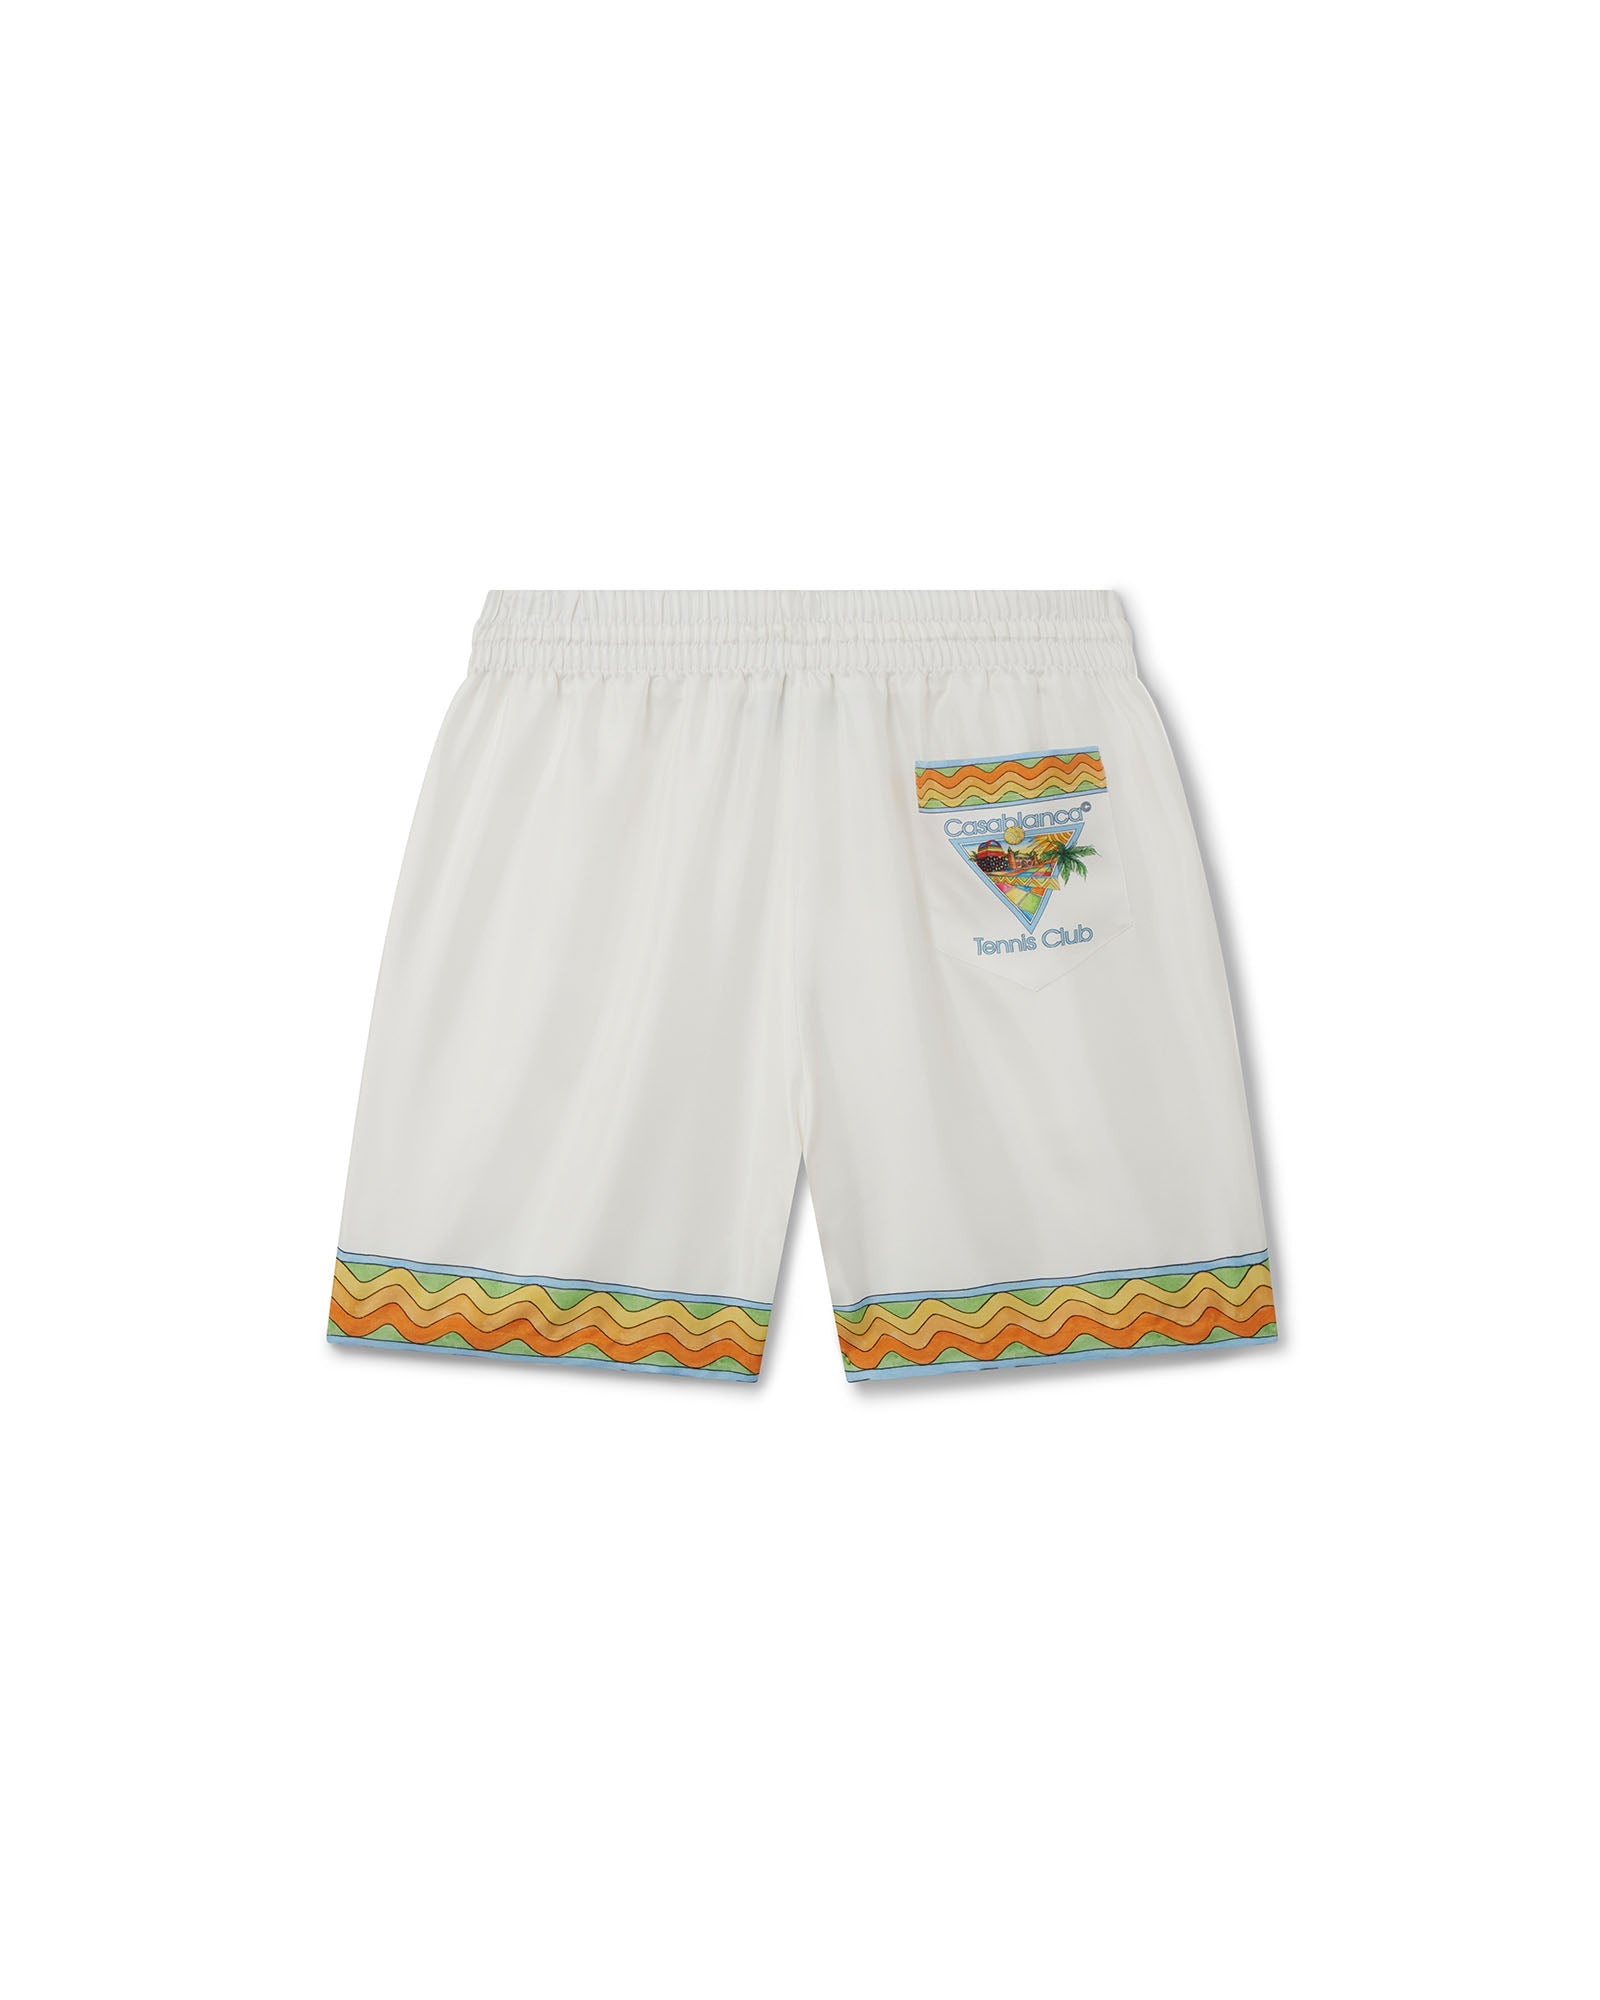 Afro Cubism Tennis Club Silk Shorts - 2